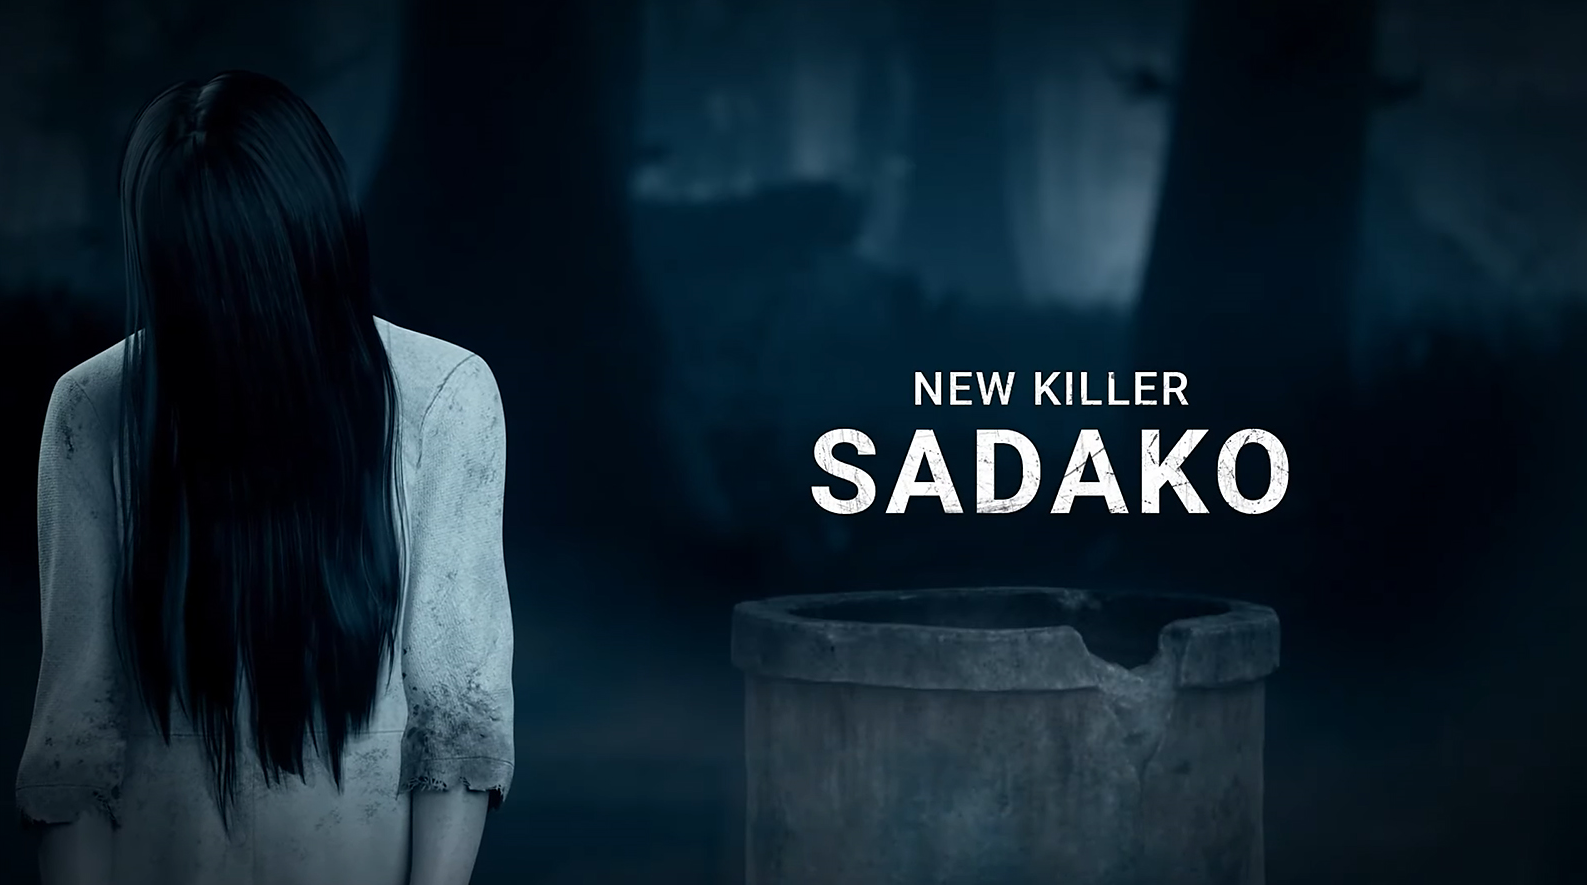 Sadako จาก The Ring เตรียมเข้ามาเป็นคิลเลอร์คนใหม่ใน Dead by Daylight